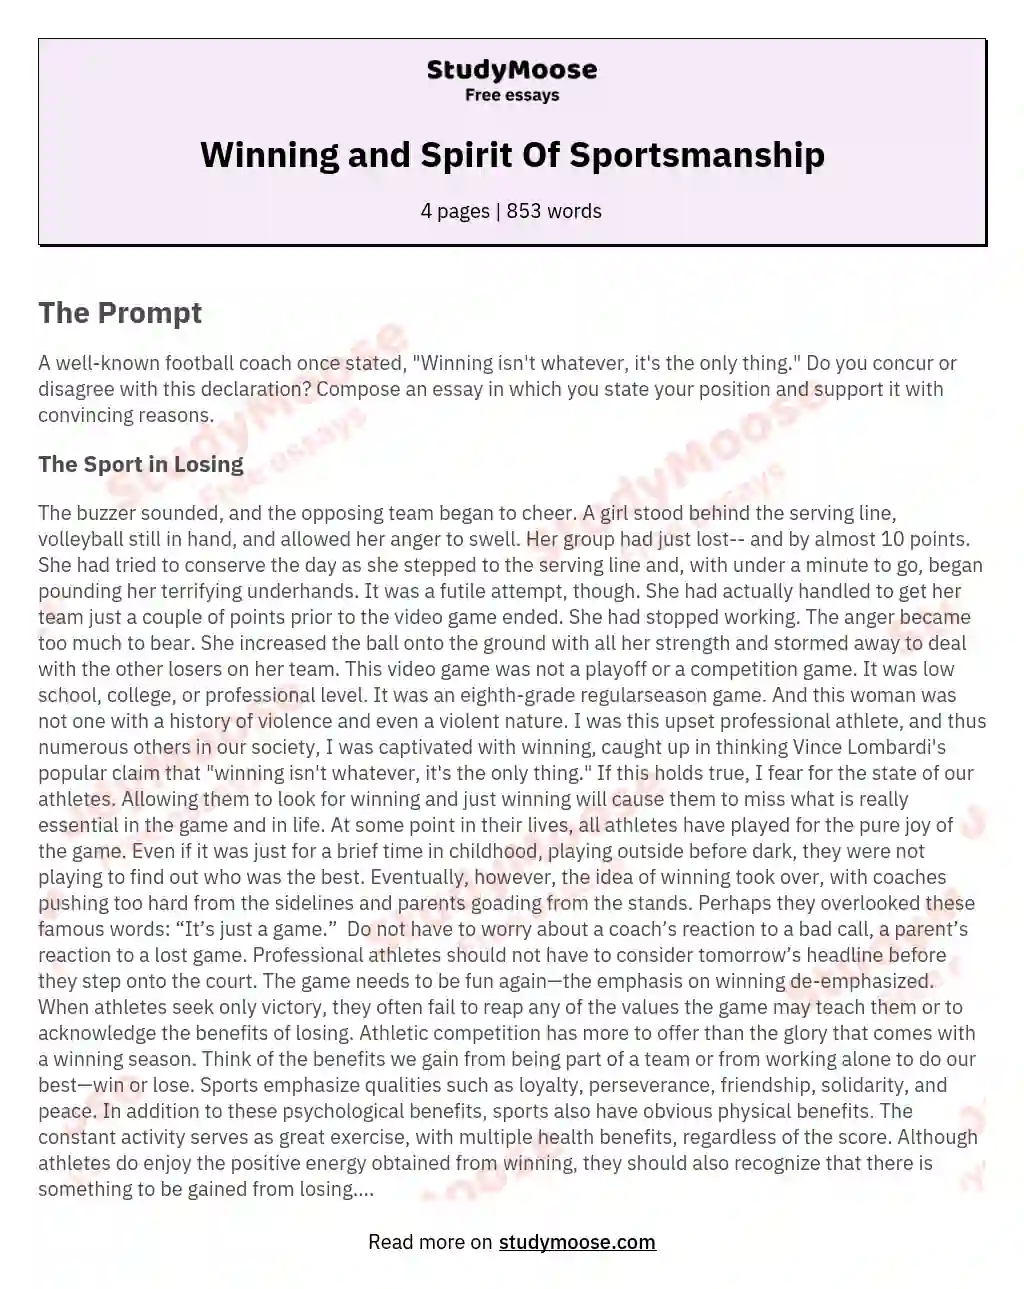 Winning and Spirit Of Sportsmanship